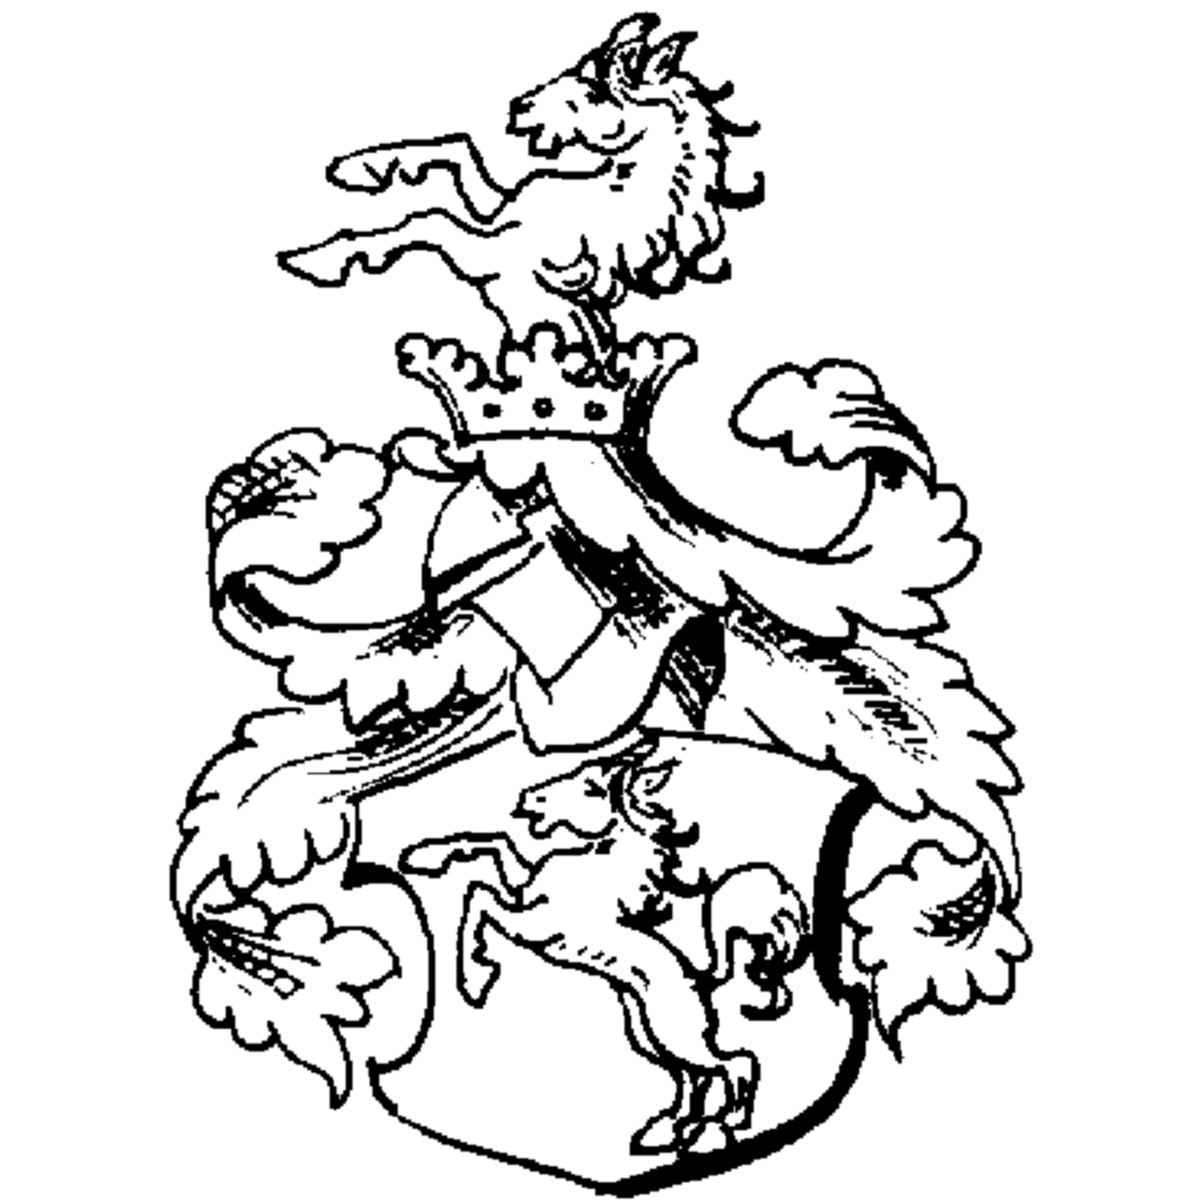 Wappen der Familie Rotweiler